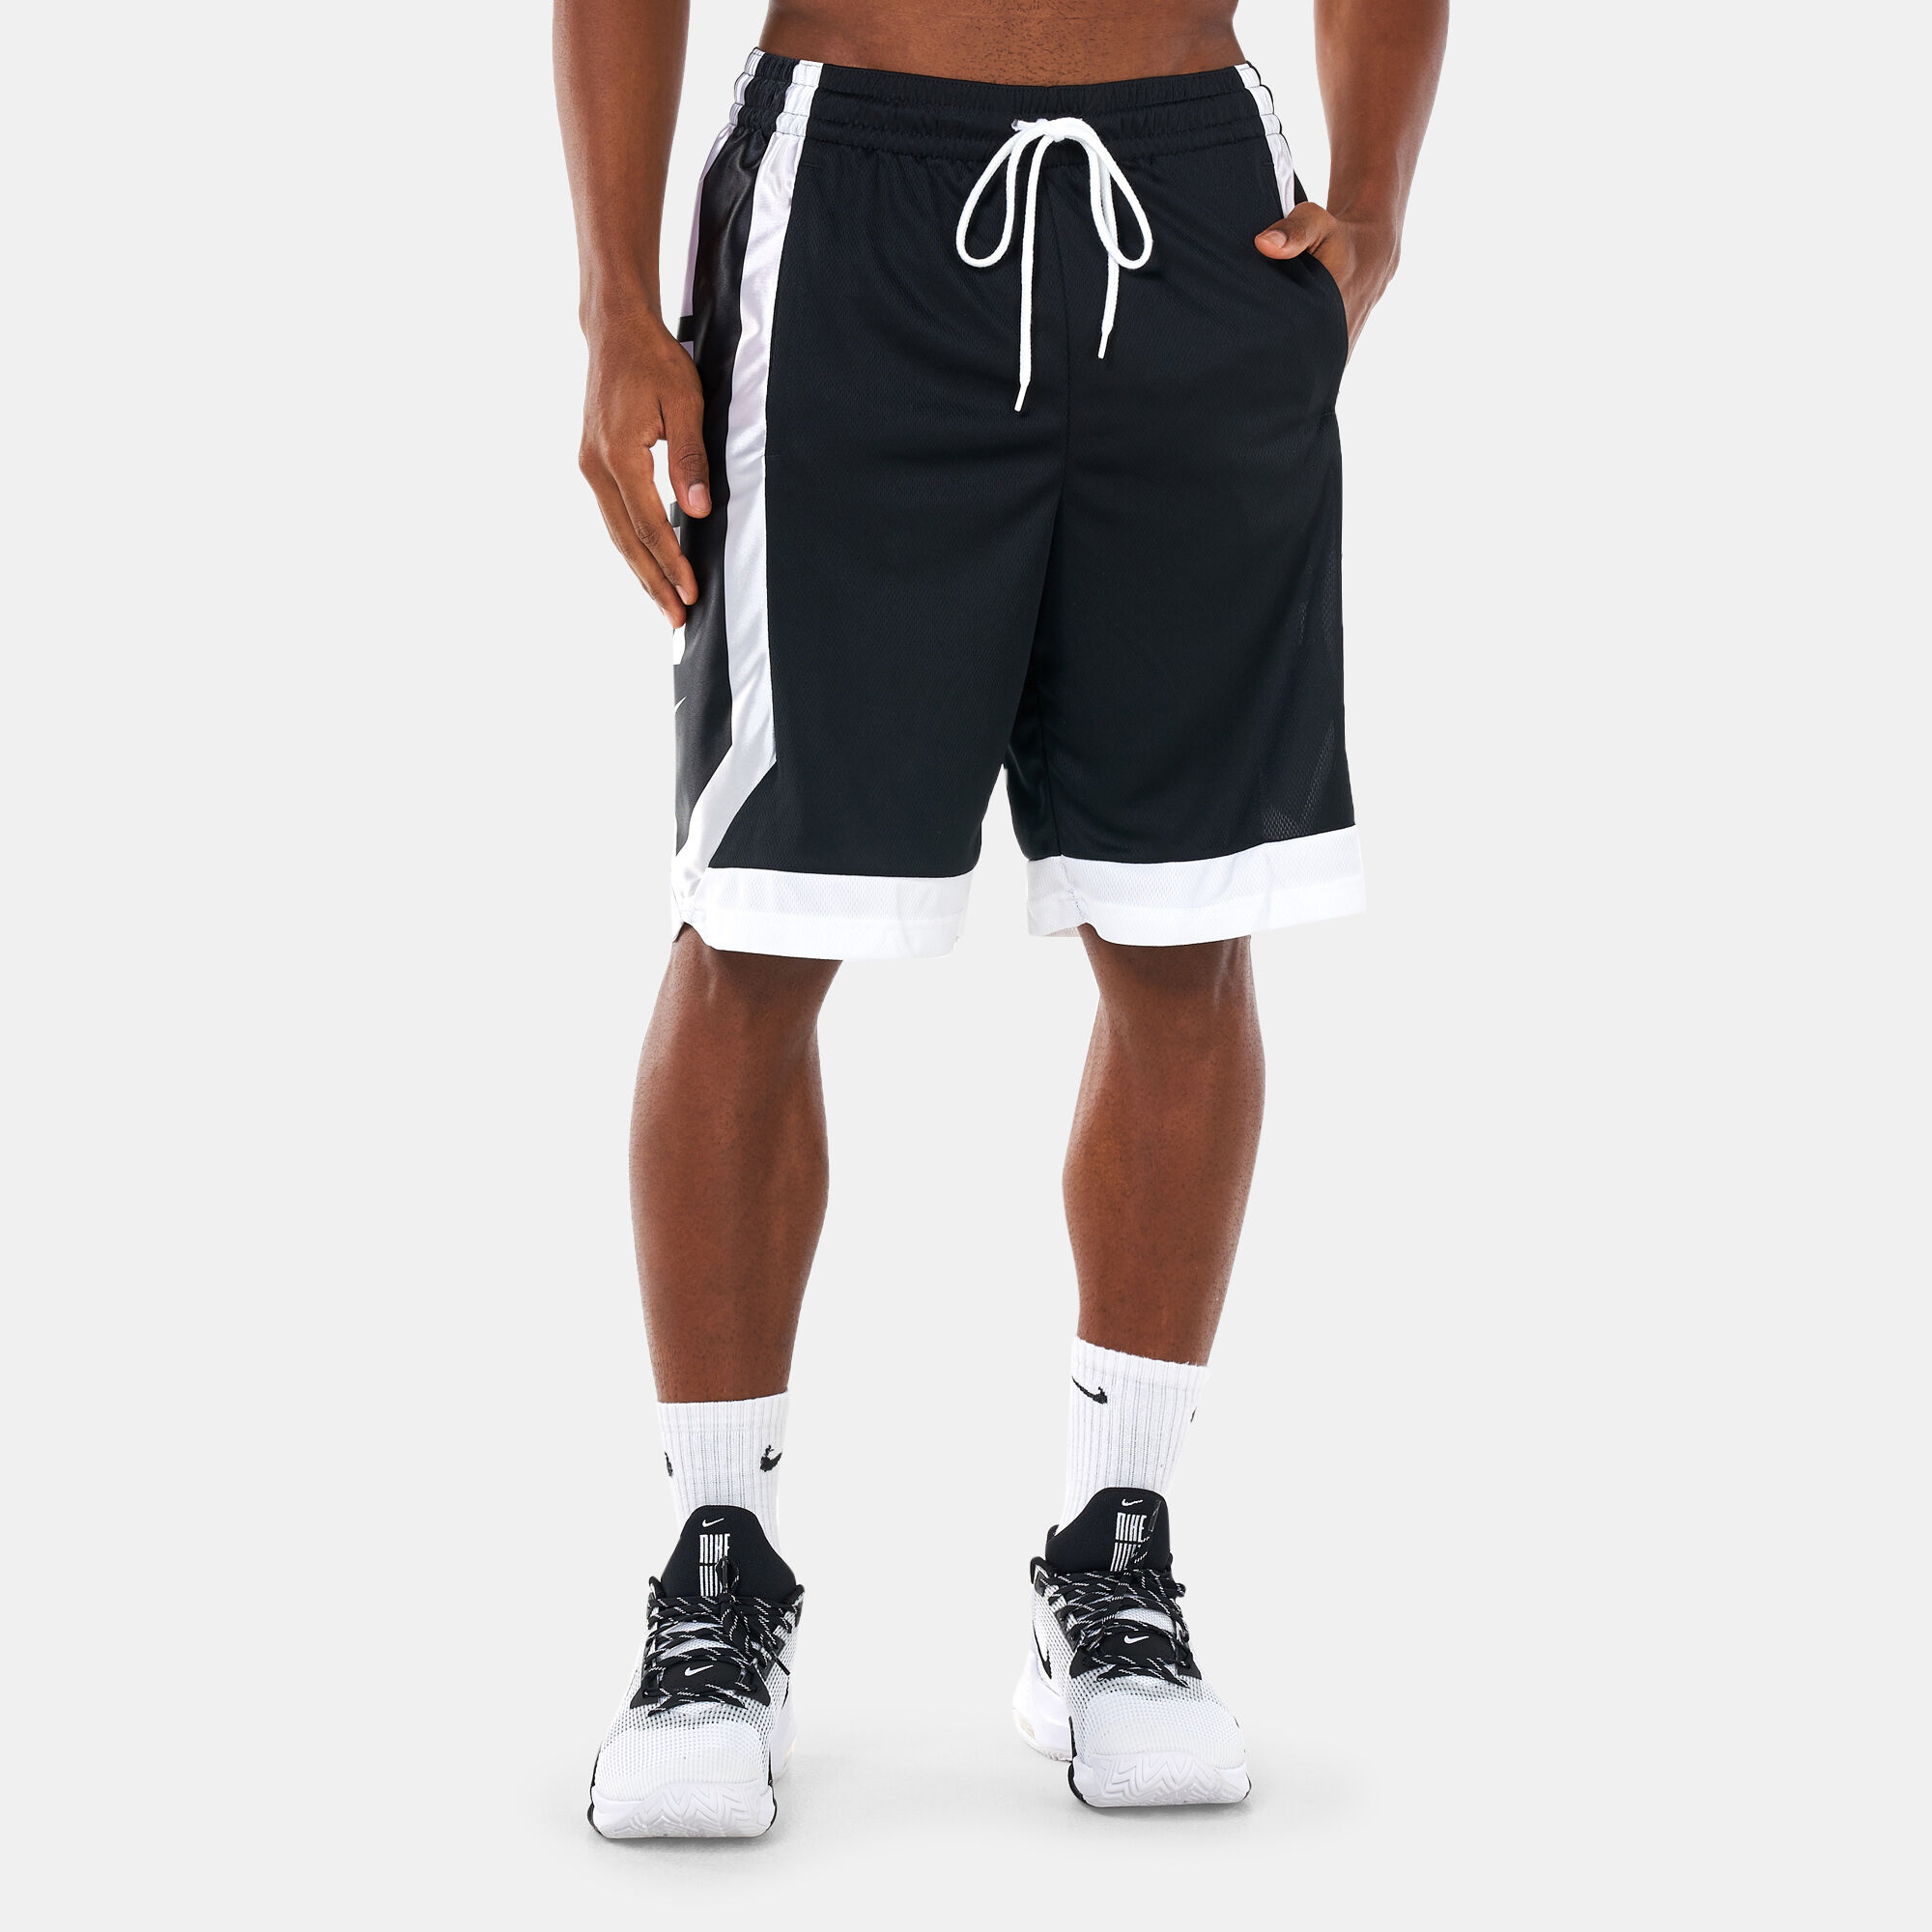  Nike Dri Fit 11 Shorts nkAQ3495 010 Black/White : Clothing,  Shoes & Jewelry